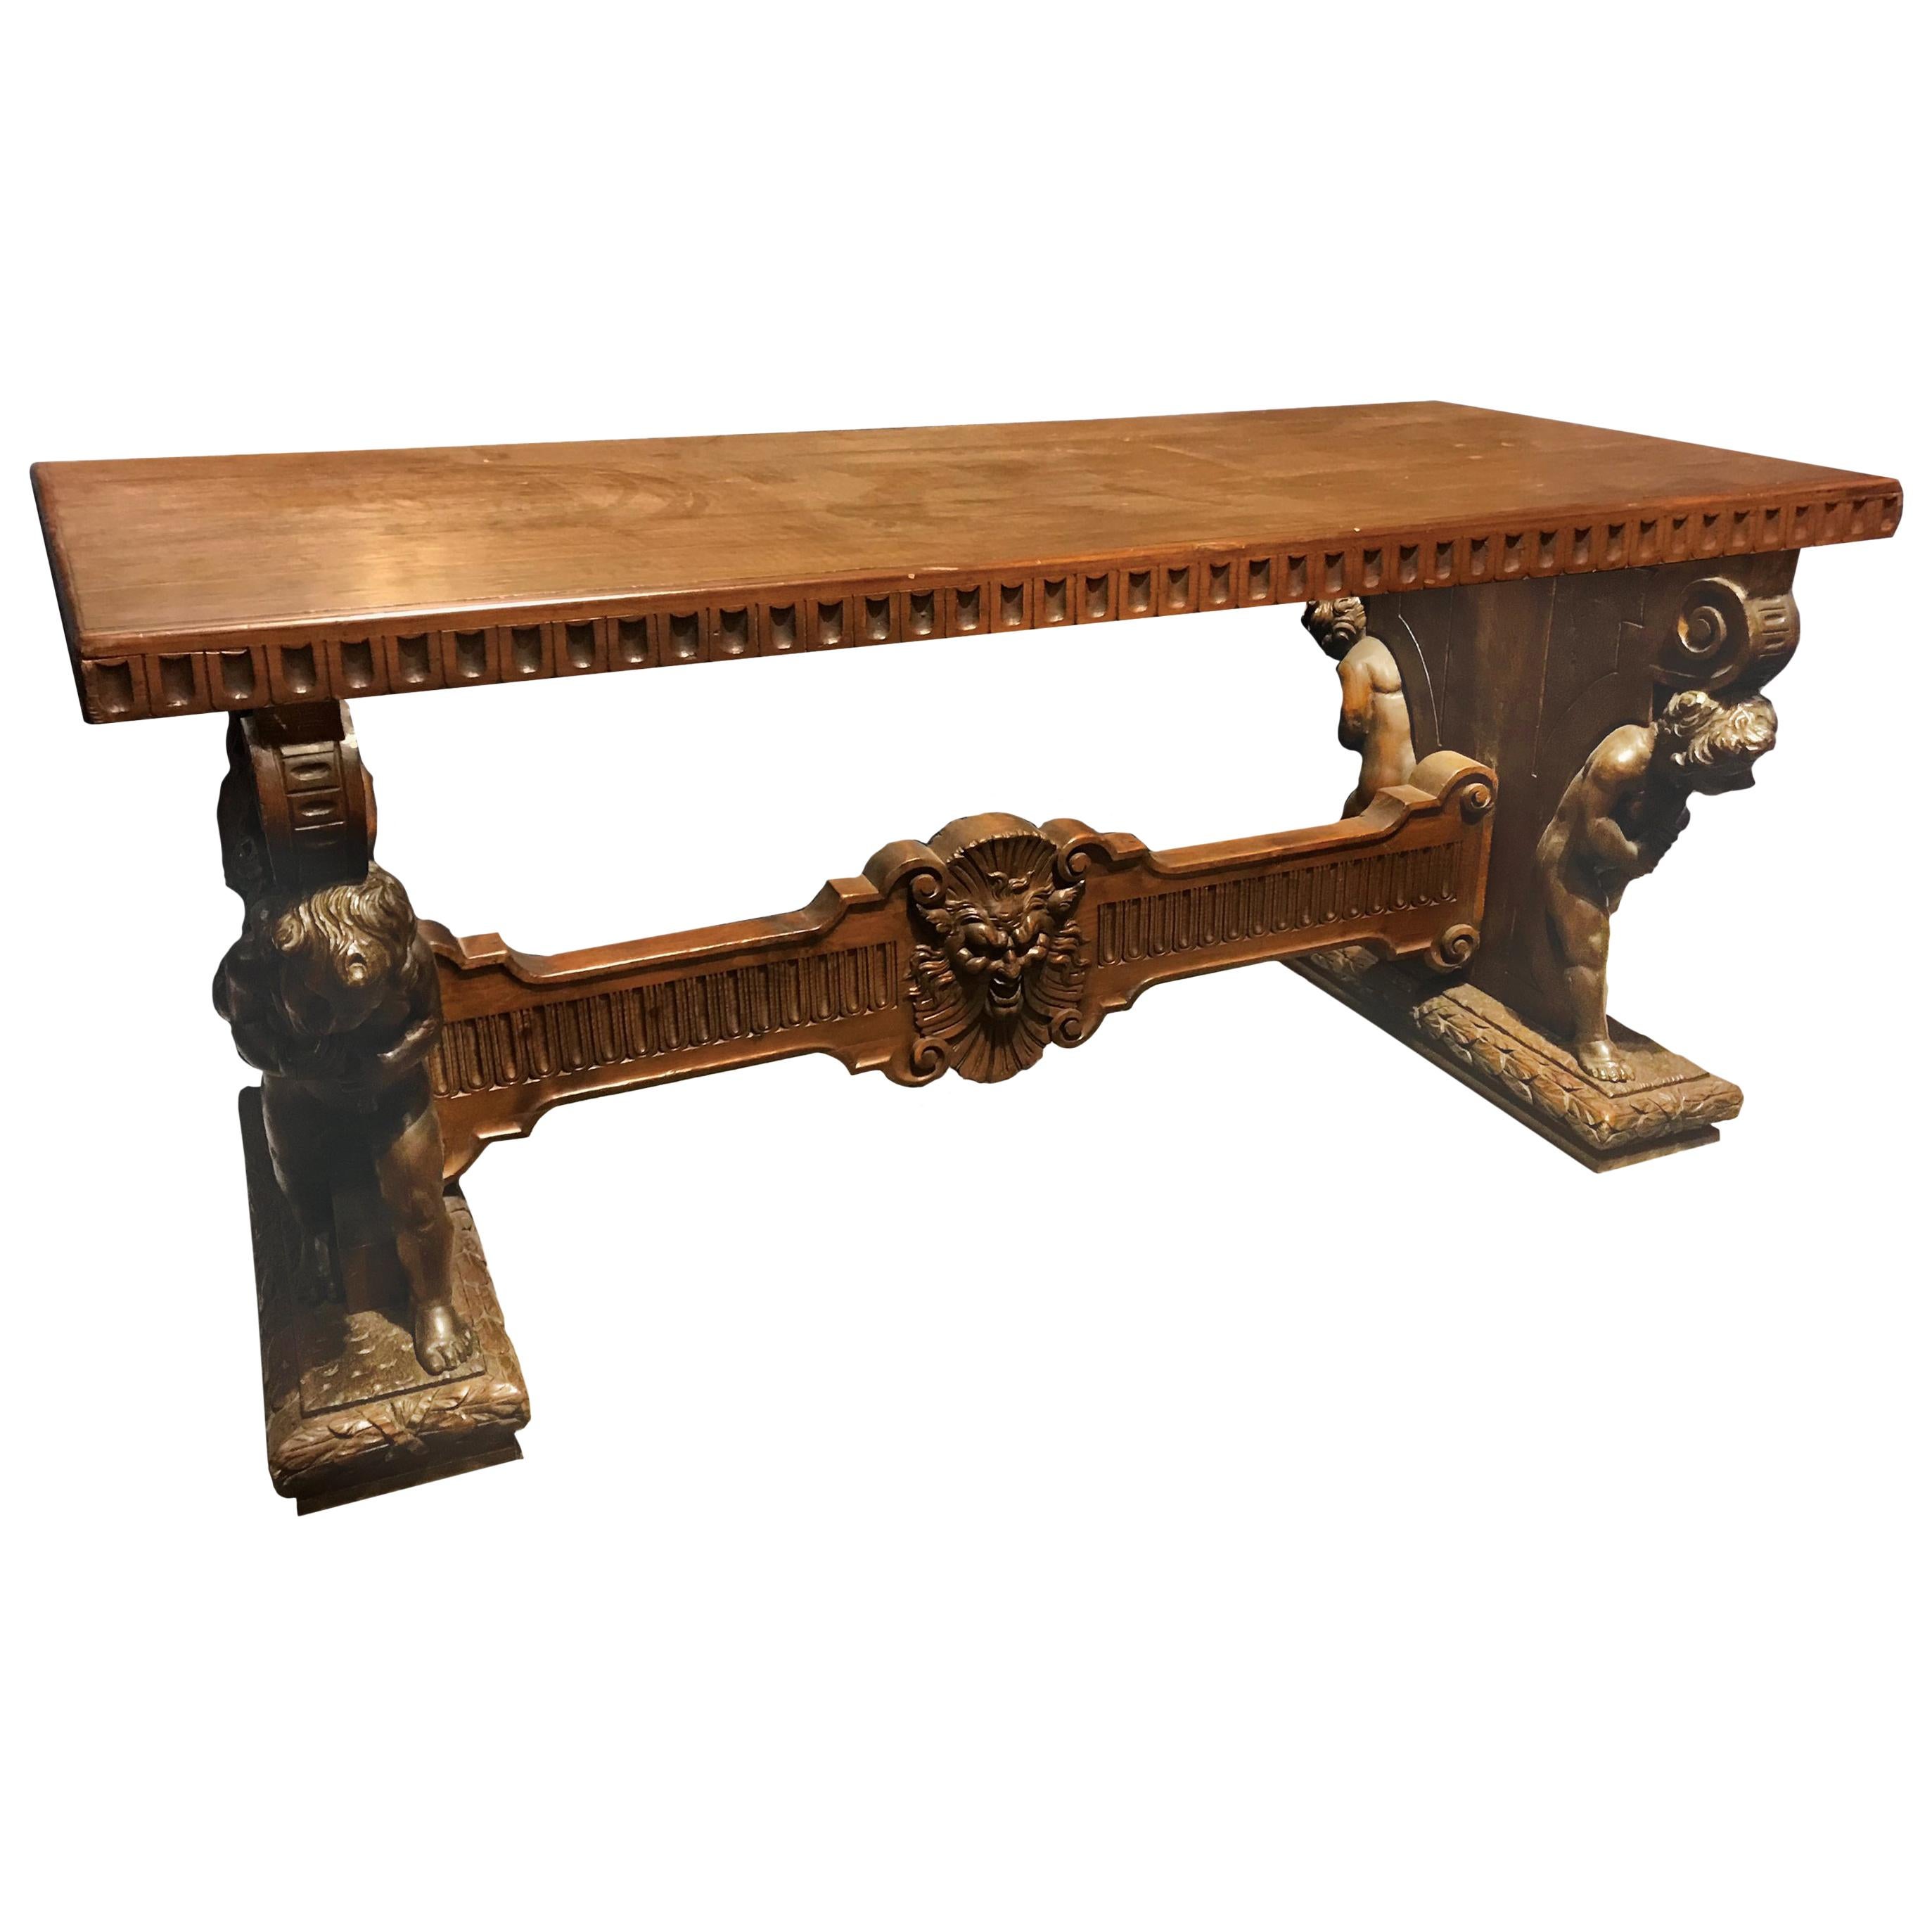 Italian Renaissance Revival Carved Walnut Table, circa 1870